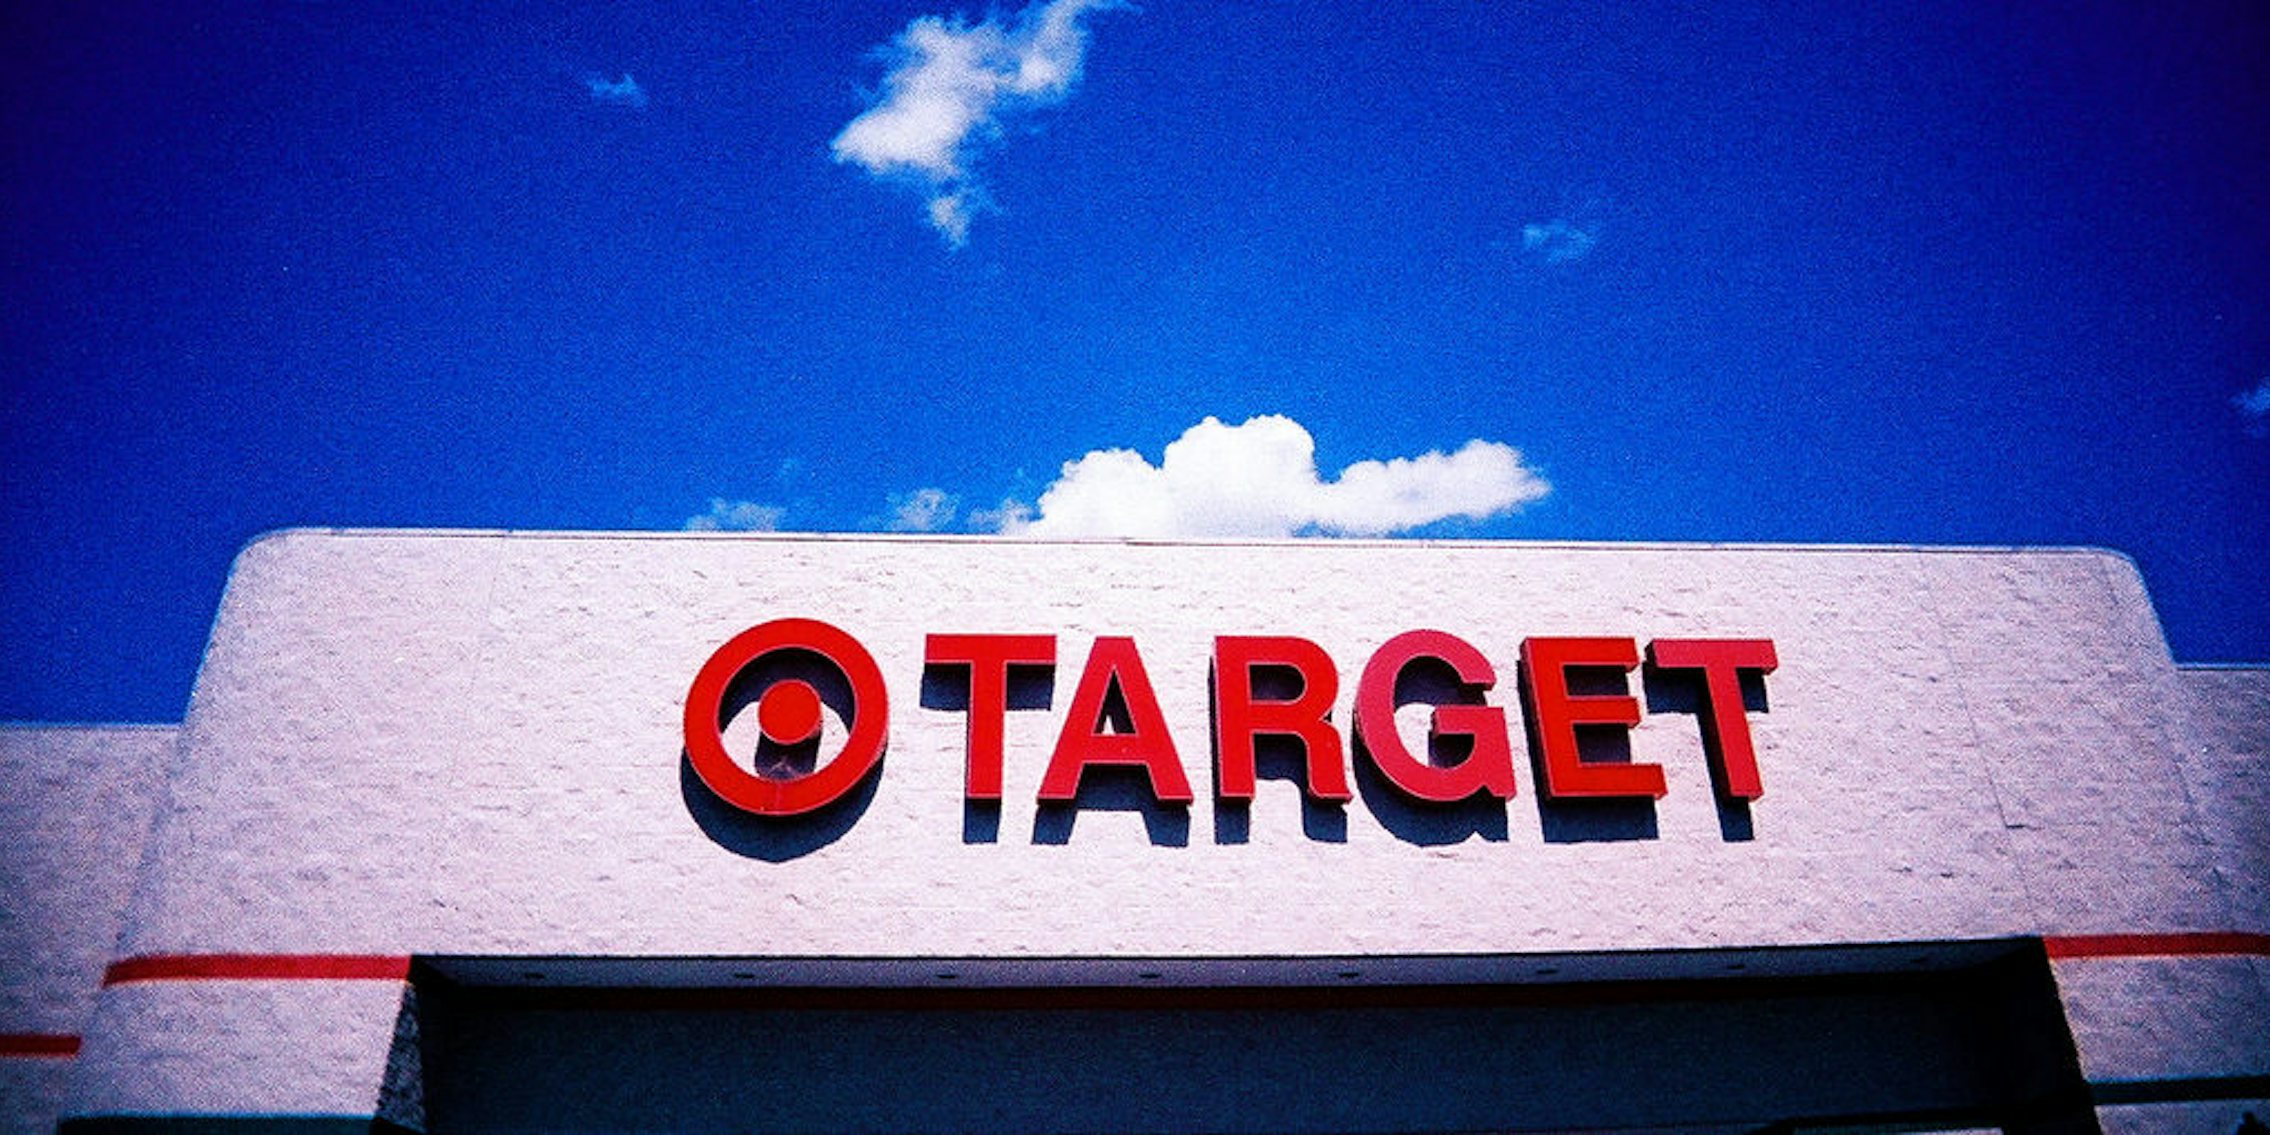 Target store